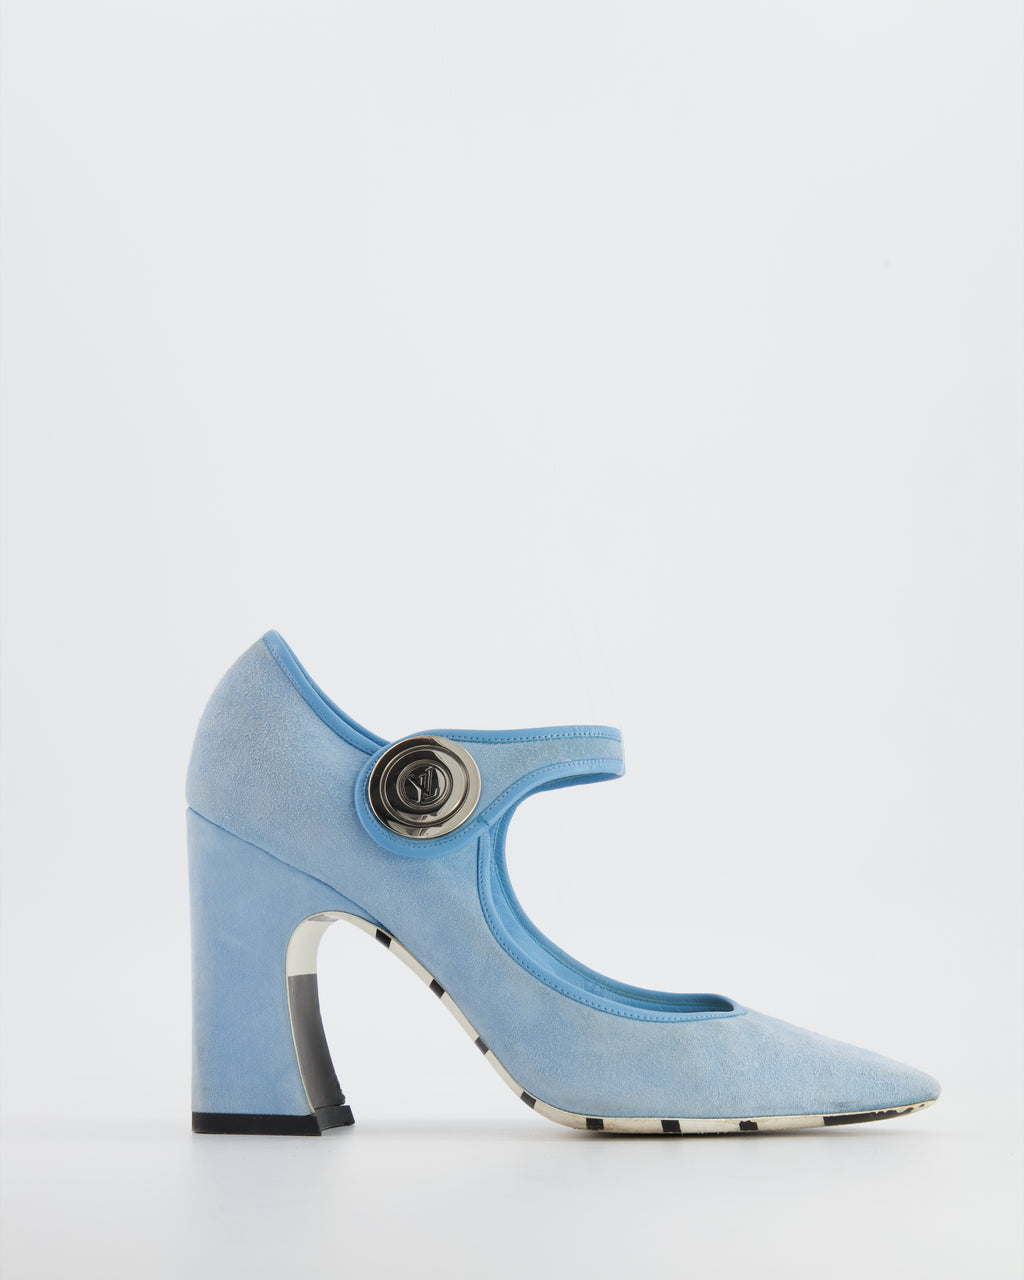 Louis Vuitton blue crystals wedding heels size 37- worn once